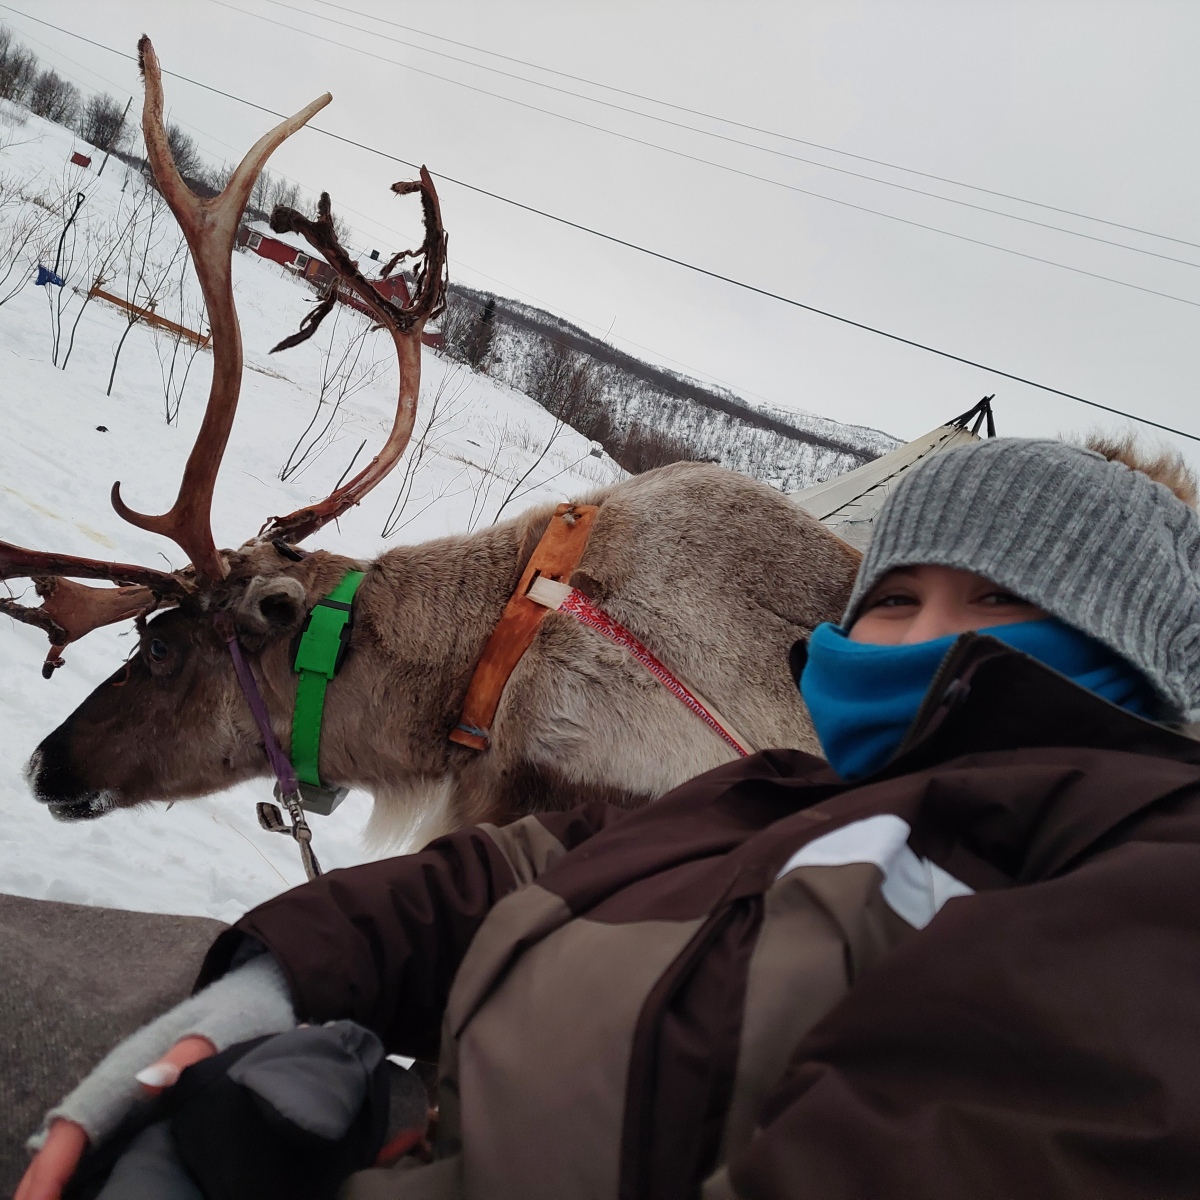 Reindeer Sledding with the Sami People